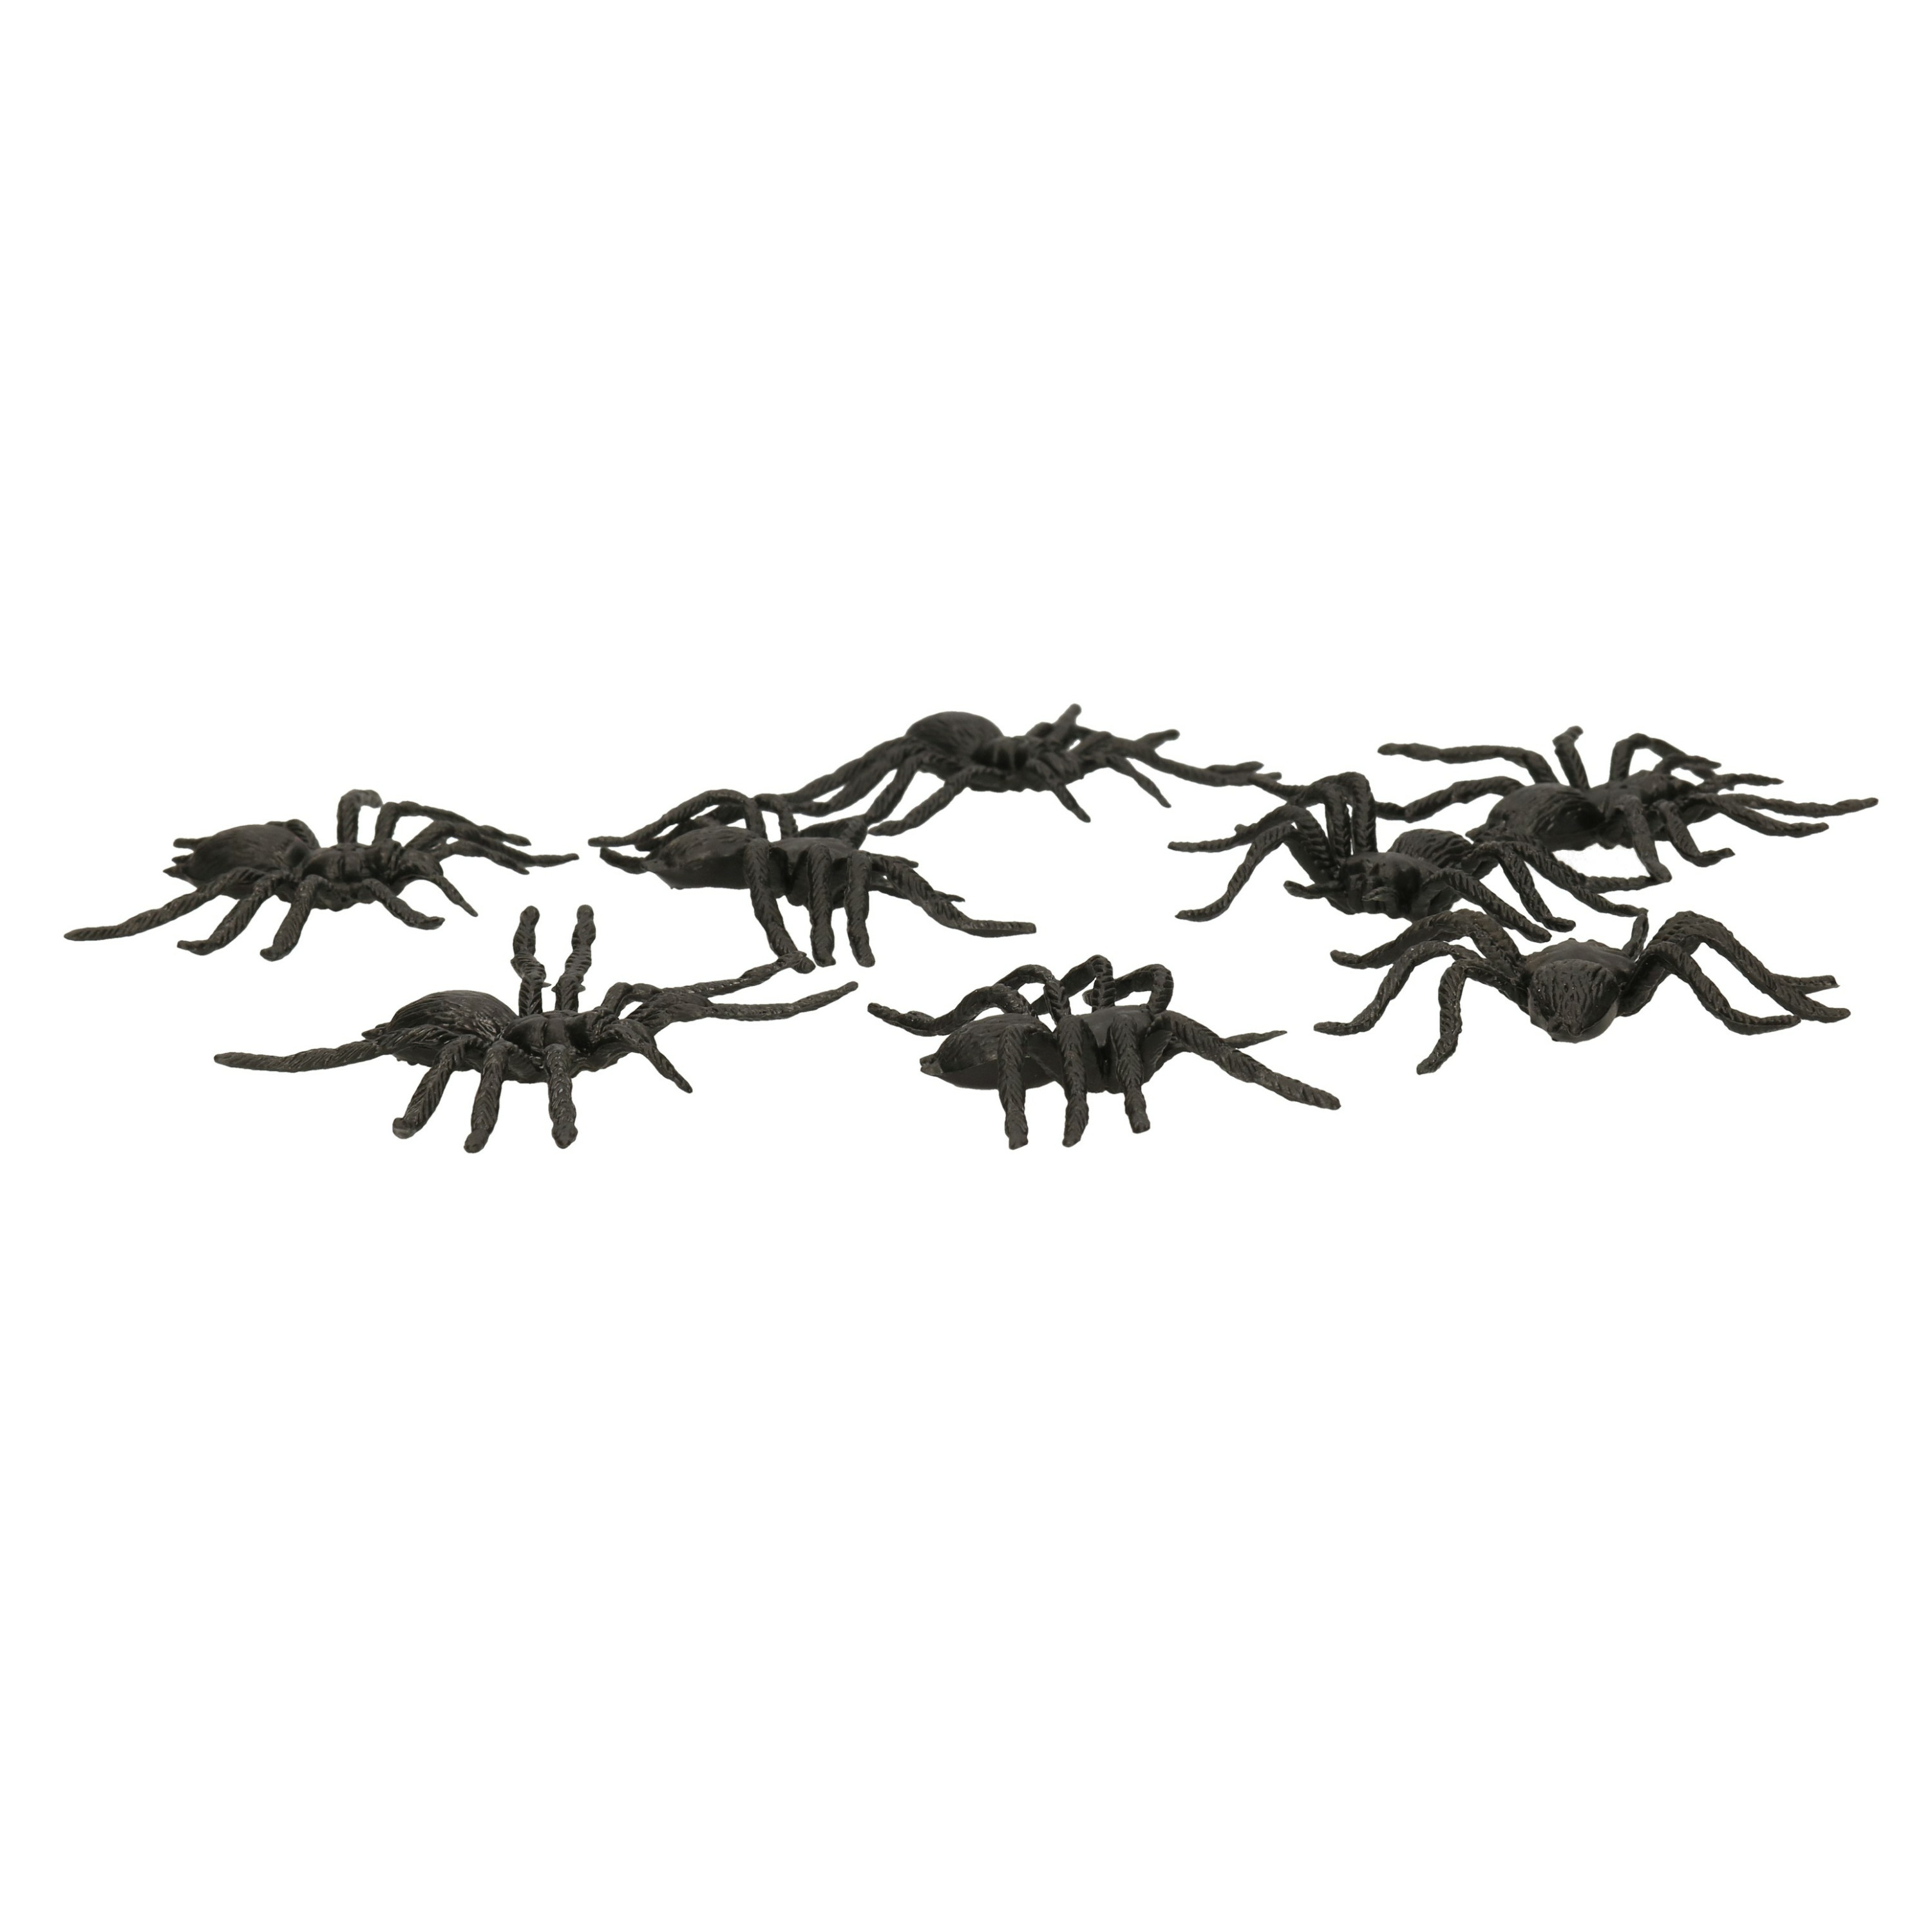 Nep spinnen/spinnetjes 6 cm - zwart - 8x stuks - Horror/griezel thema decoratie beestjes